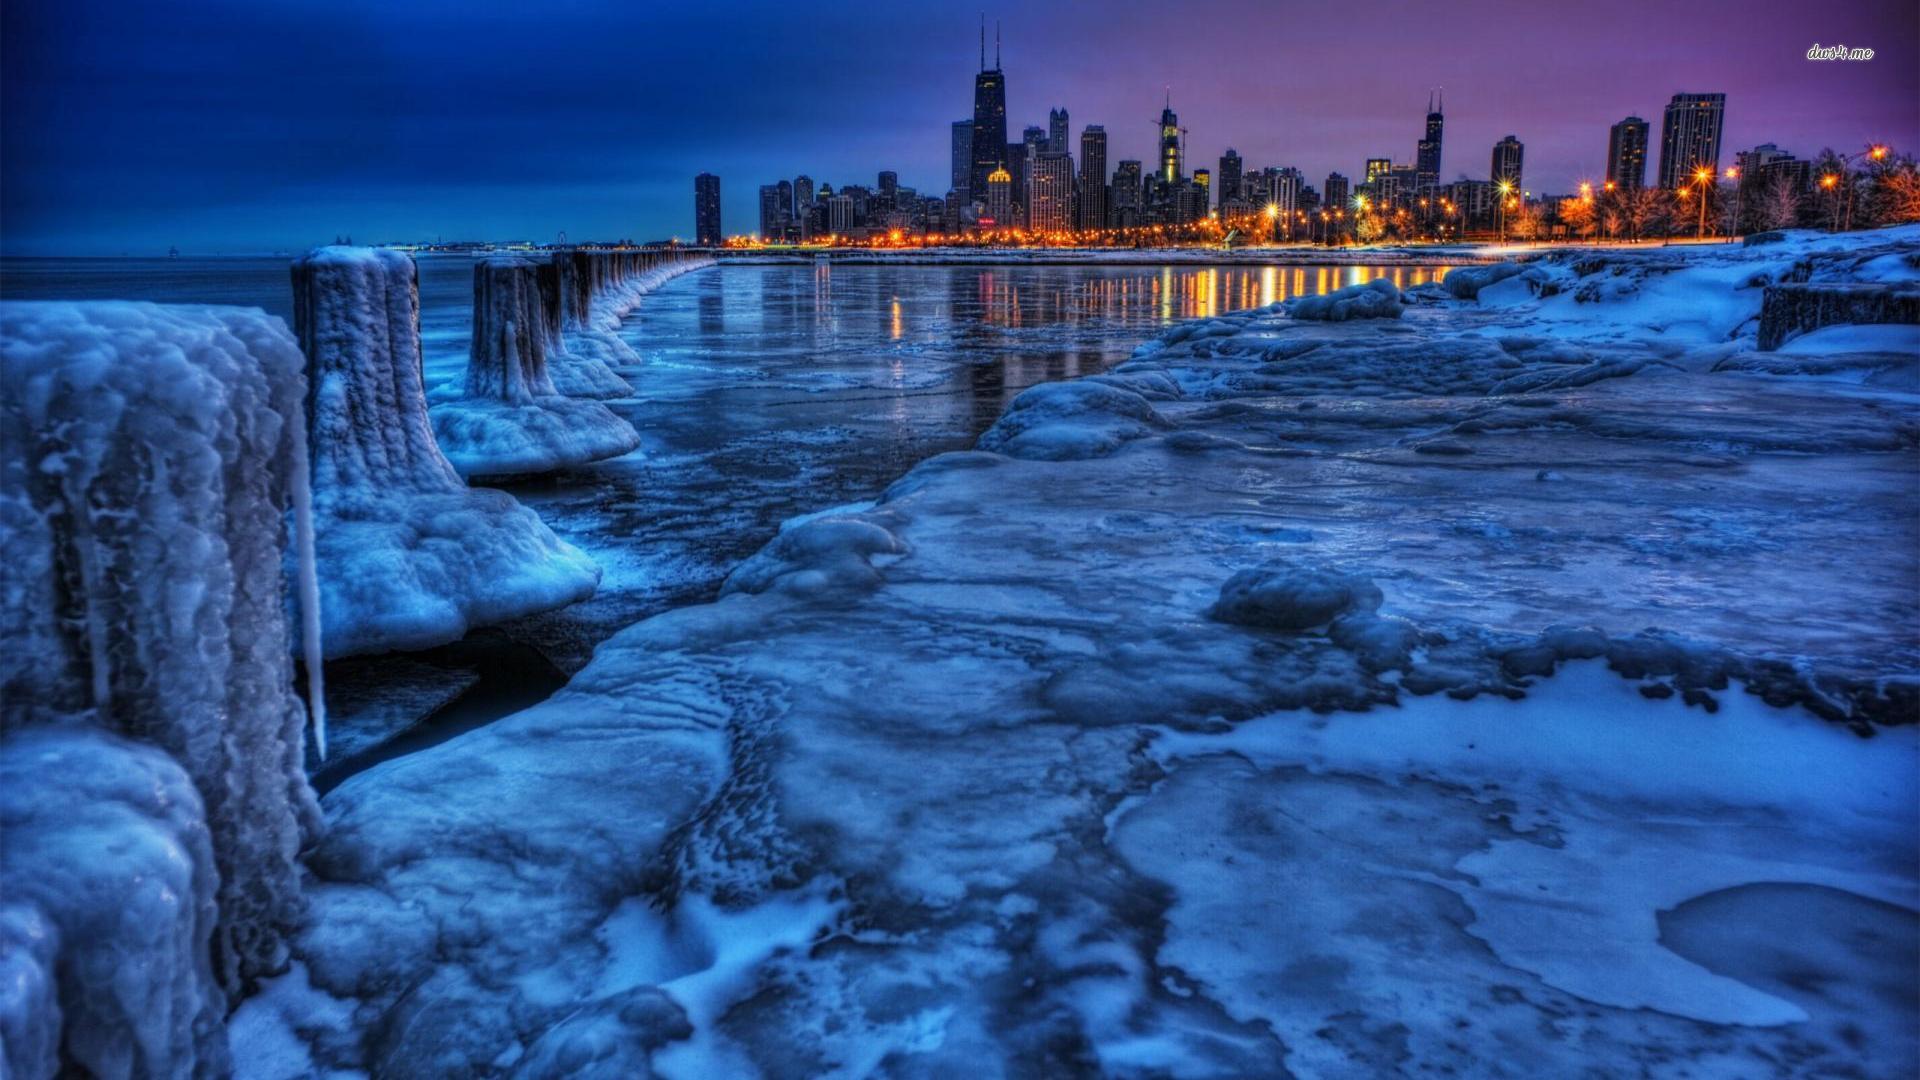 Chicago Winter - wallpaper.